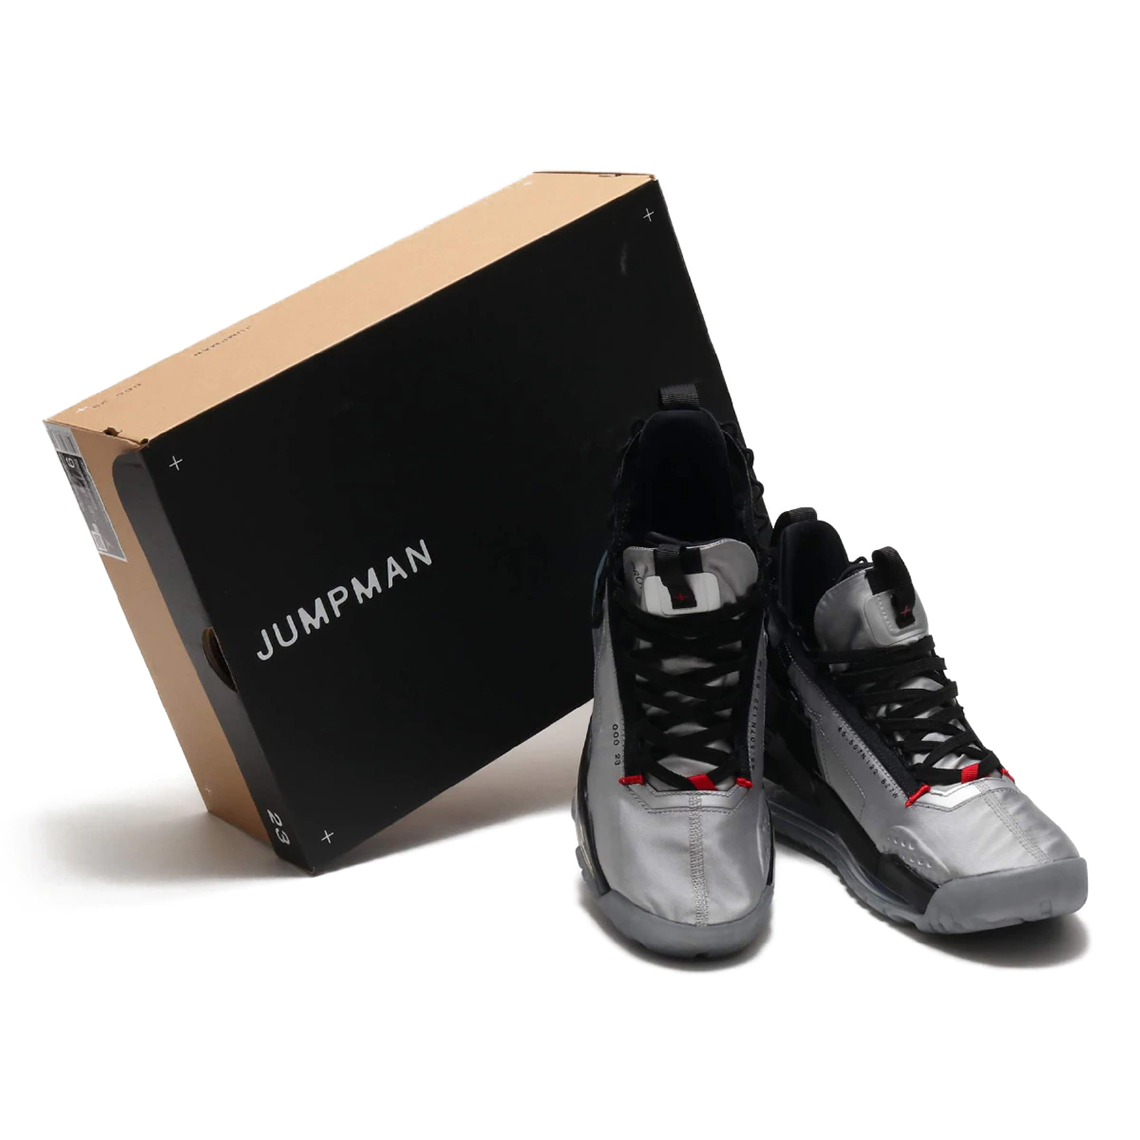 Jordan Air Jordan 6 33 Metallic Silver Bq6623 002 9